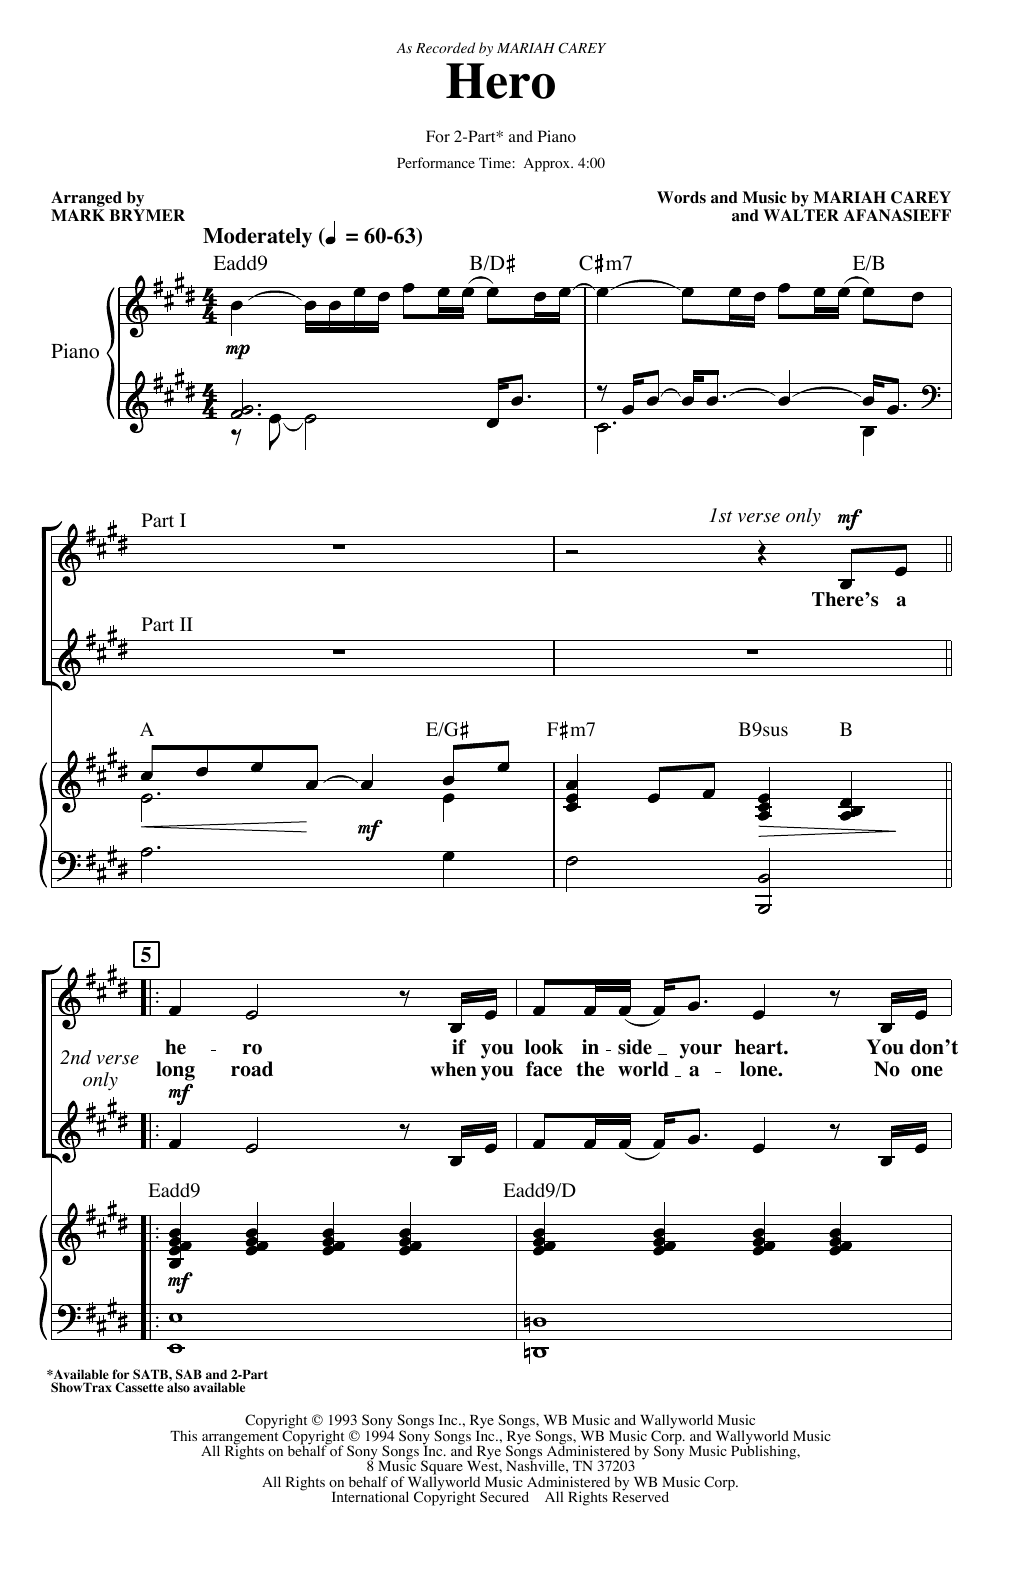 Mariah Carey Hero (arr. Mark Brymer) sheet music notes and chords arranged for 2-Part Choir